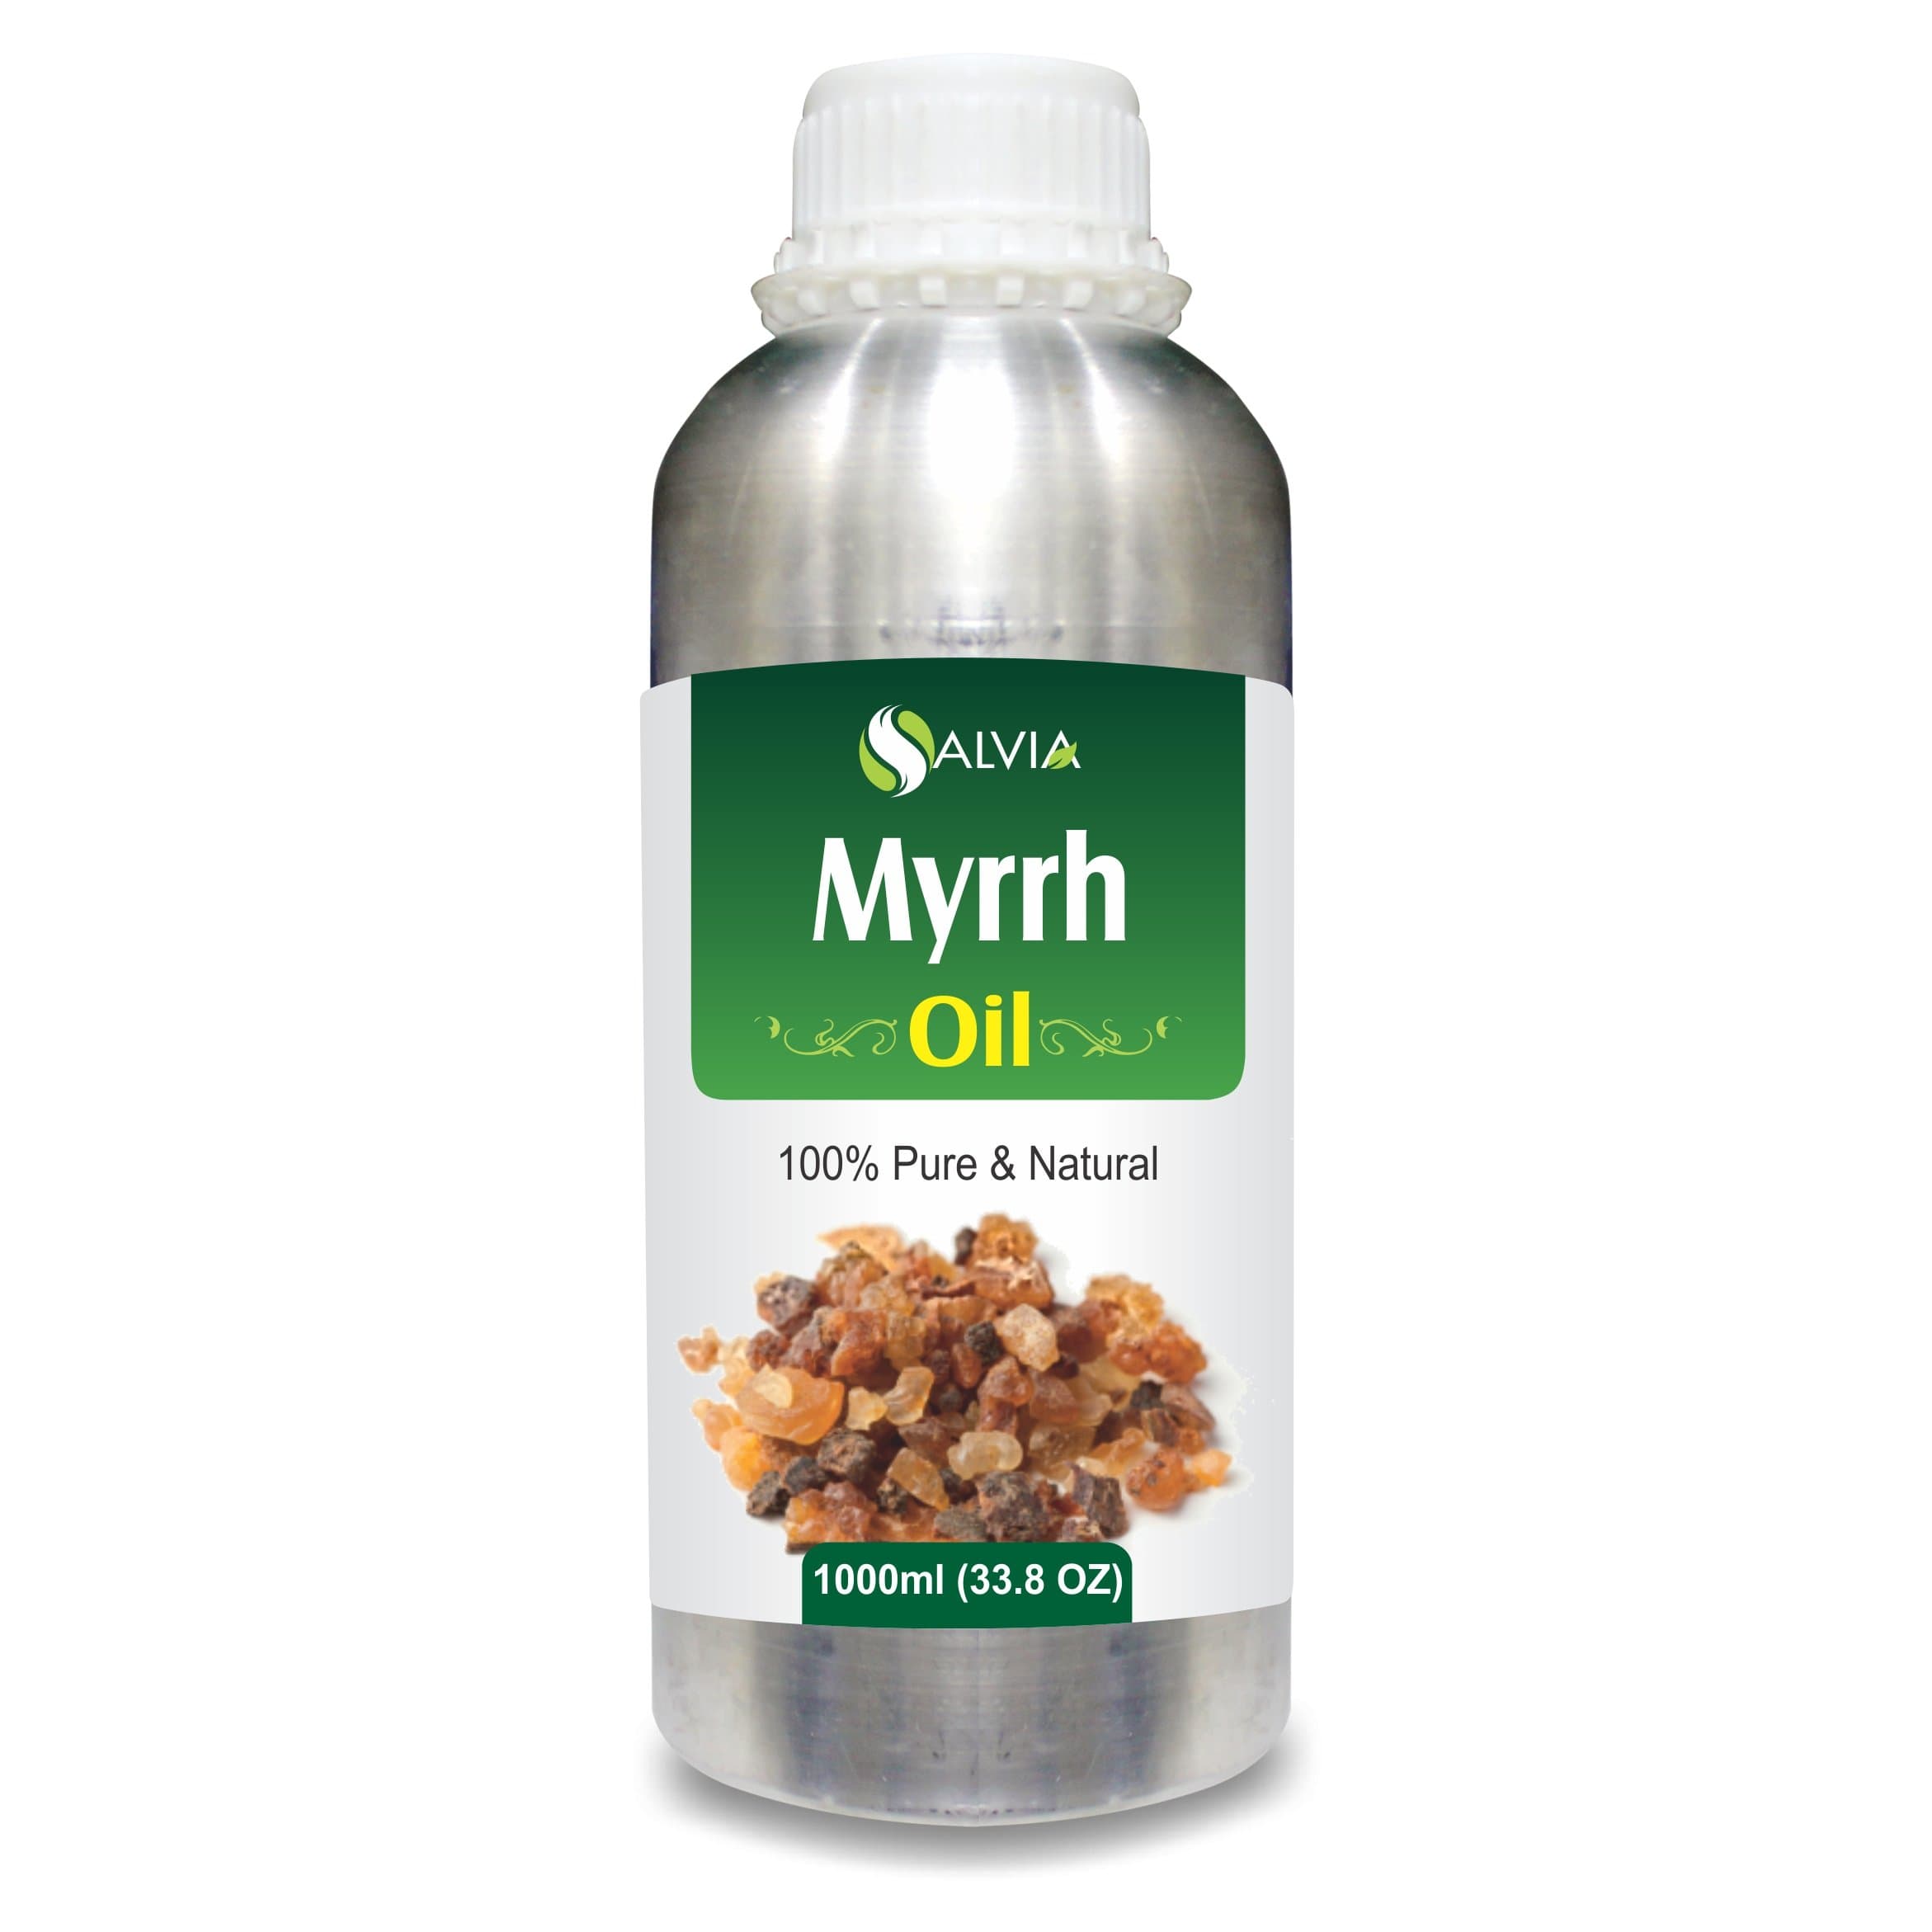 myrrh oil benefits for hair